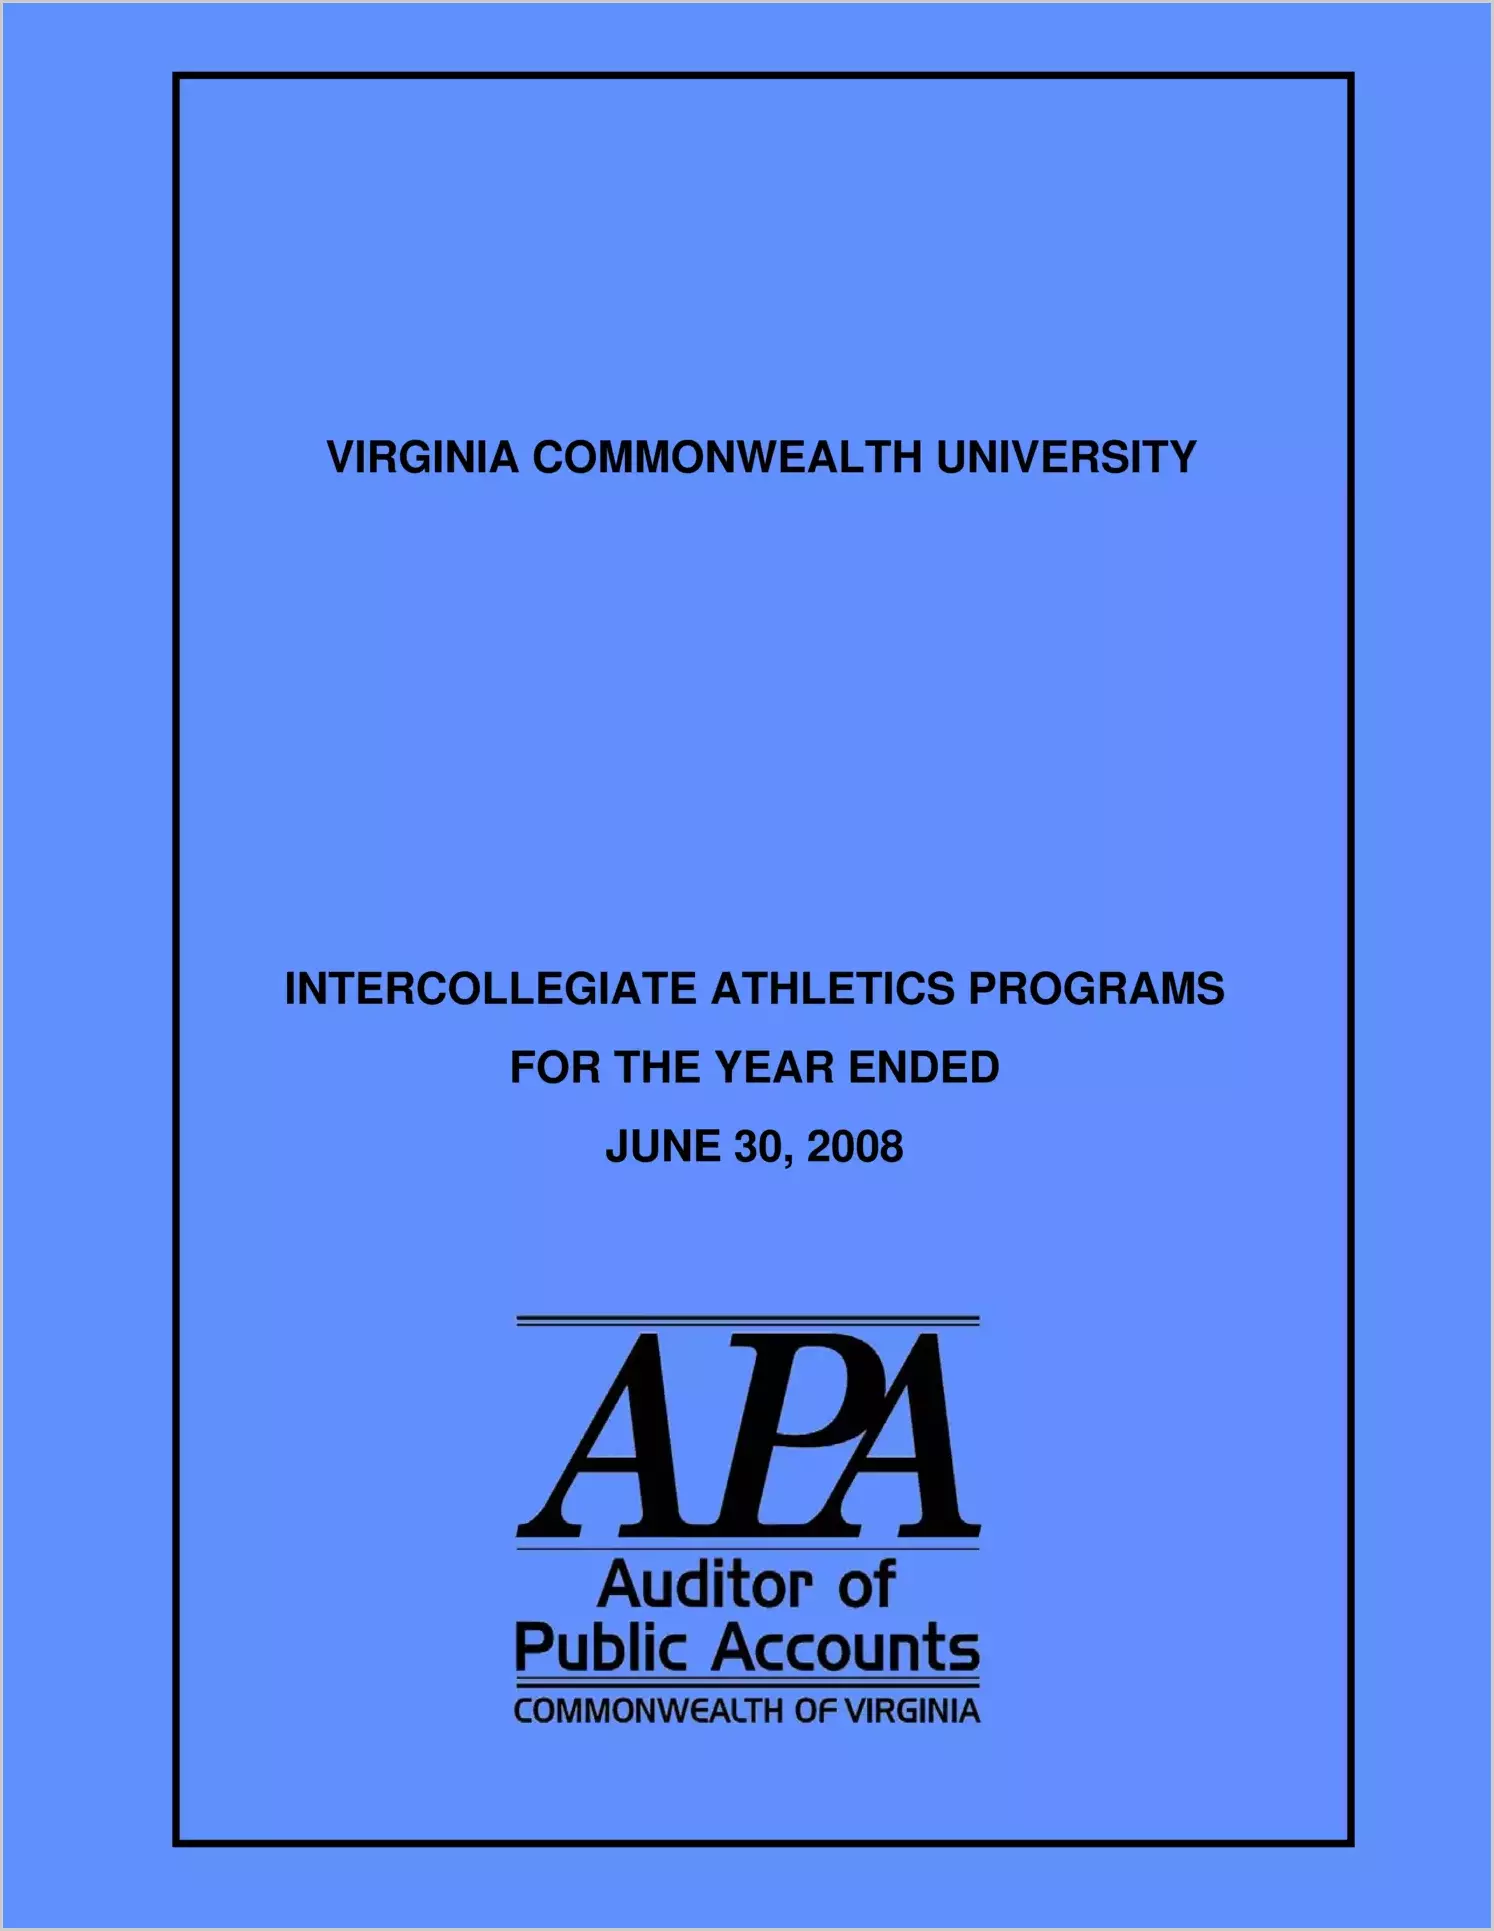 Virginia Commonwealth University Intercollegiate Athletics Programs for the year ended June 30, 2008